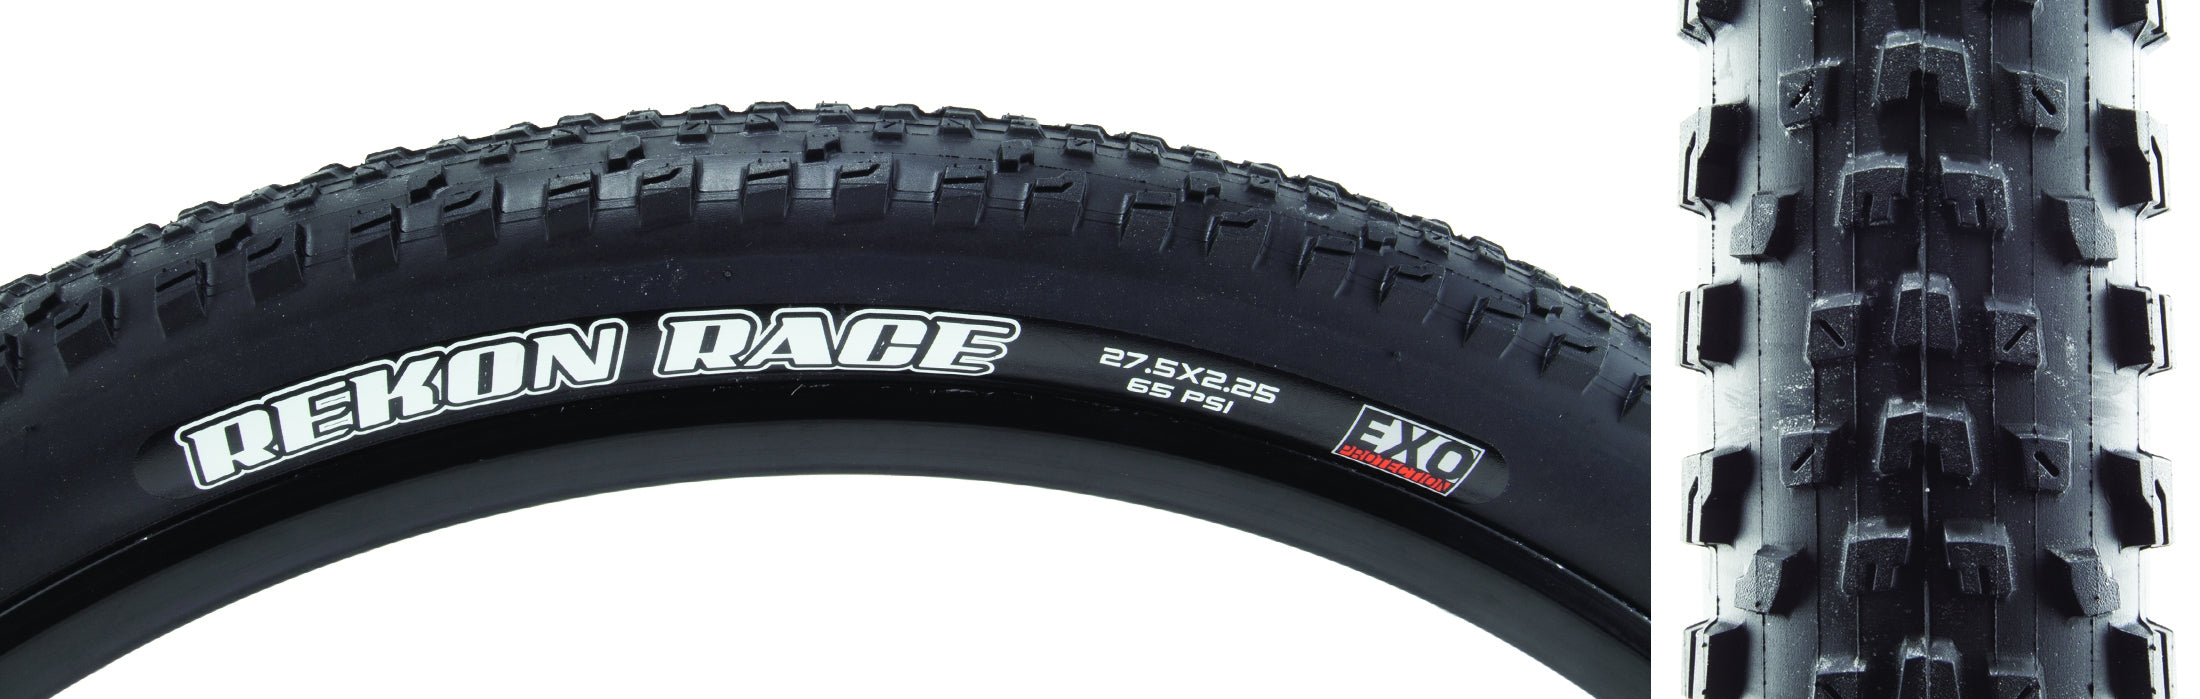 Maxxis Cross Country Rekon Race, Wire Bead MTB Tire, 27.5 x 2.25